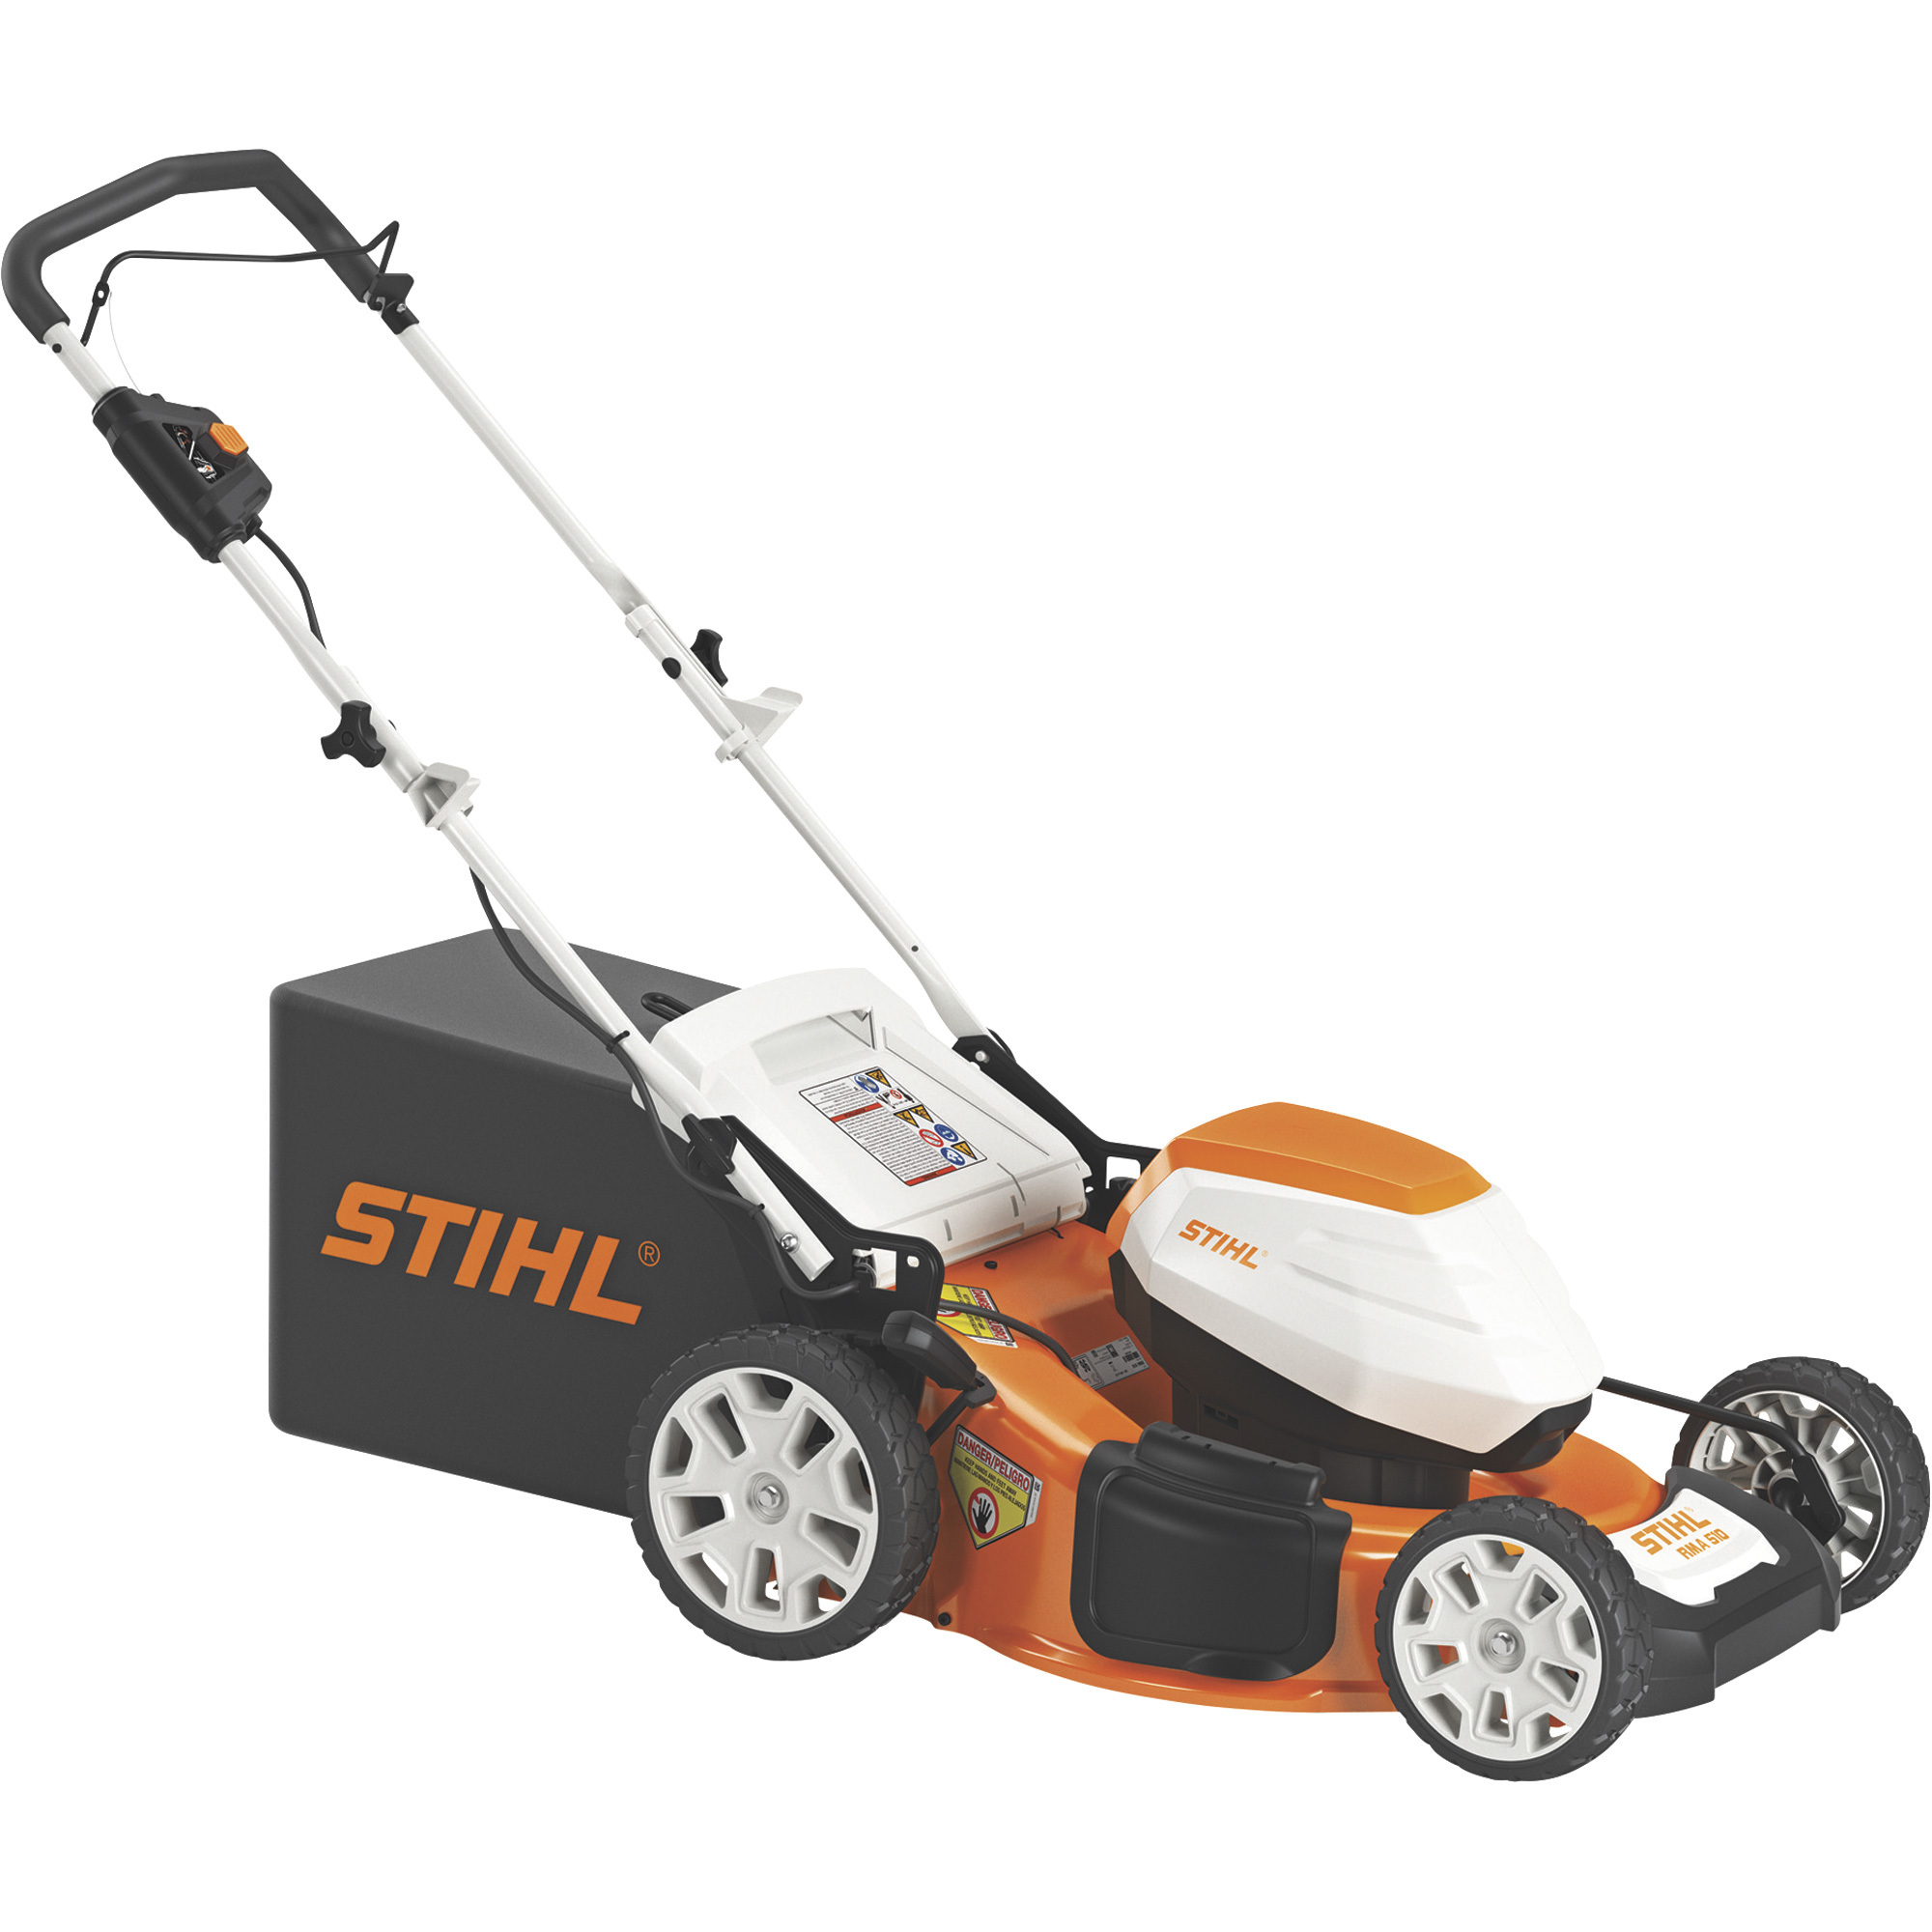 Stihl AP Series Walk-Behind Cordless Lawn Mower â 21Inch Deck, Model RMA 510 KIT